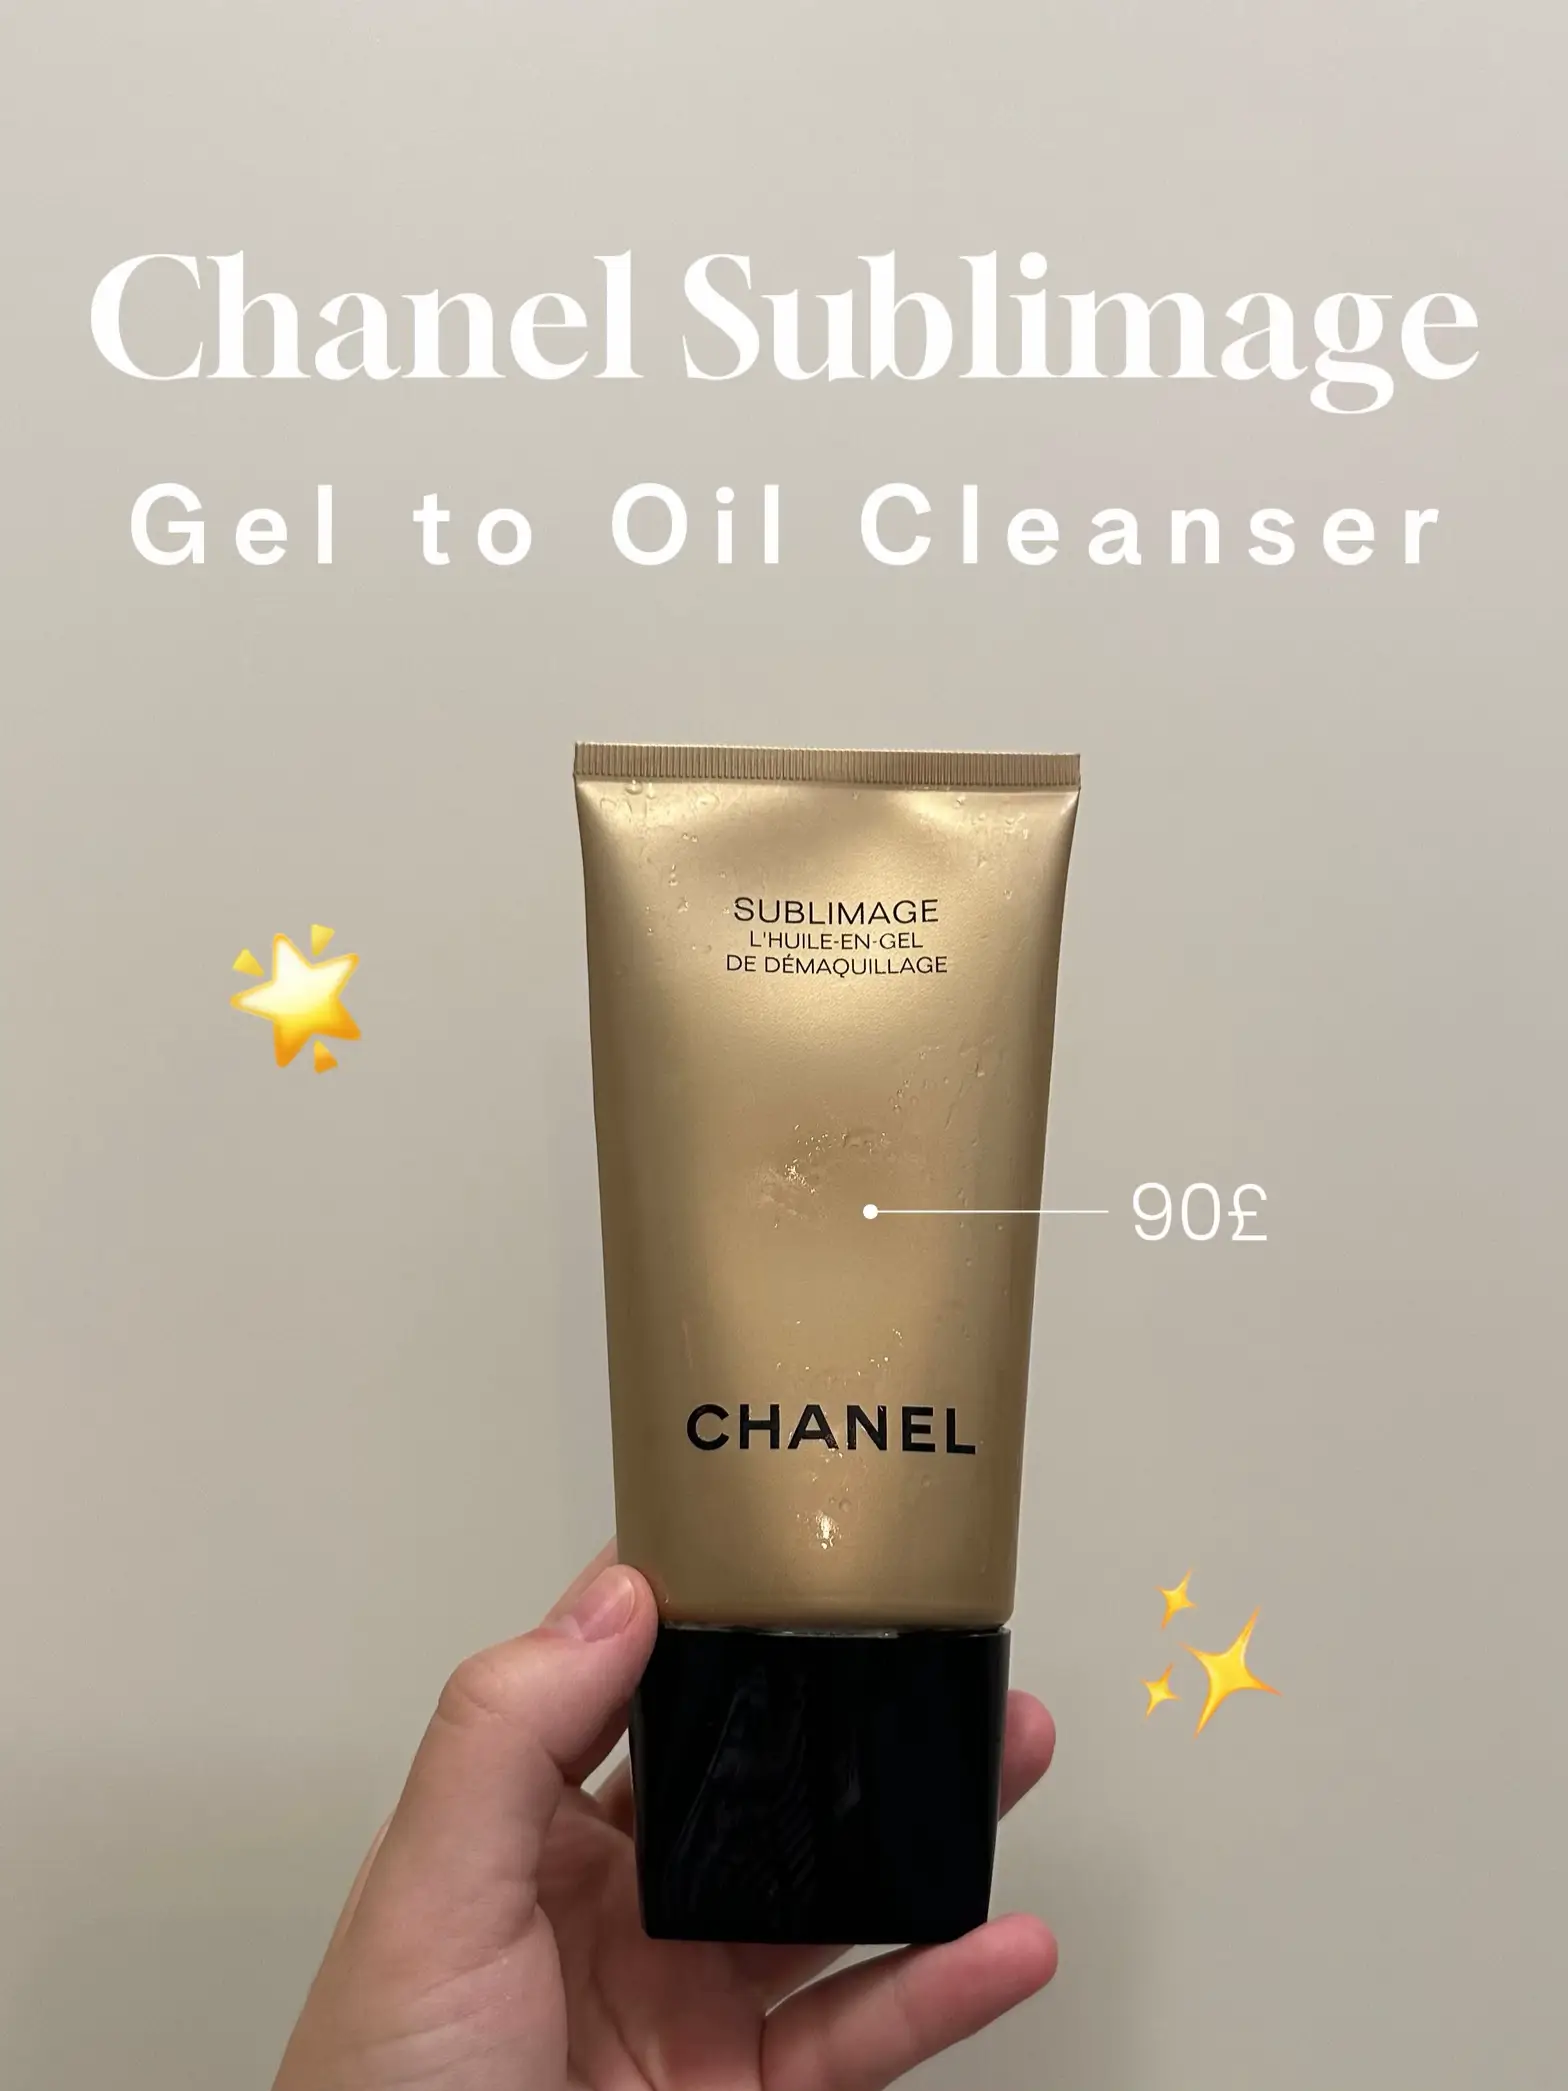 Chanel Sublimage Foundation First Impression! 